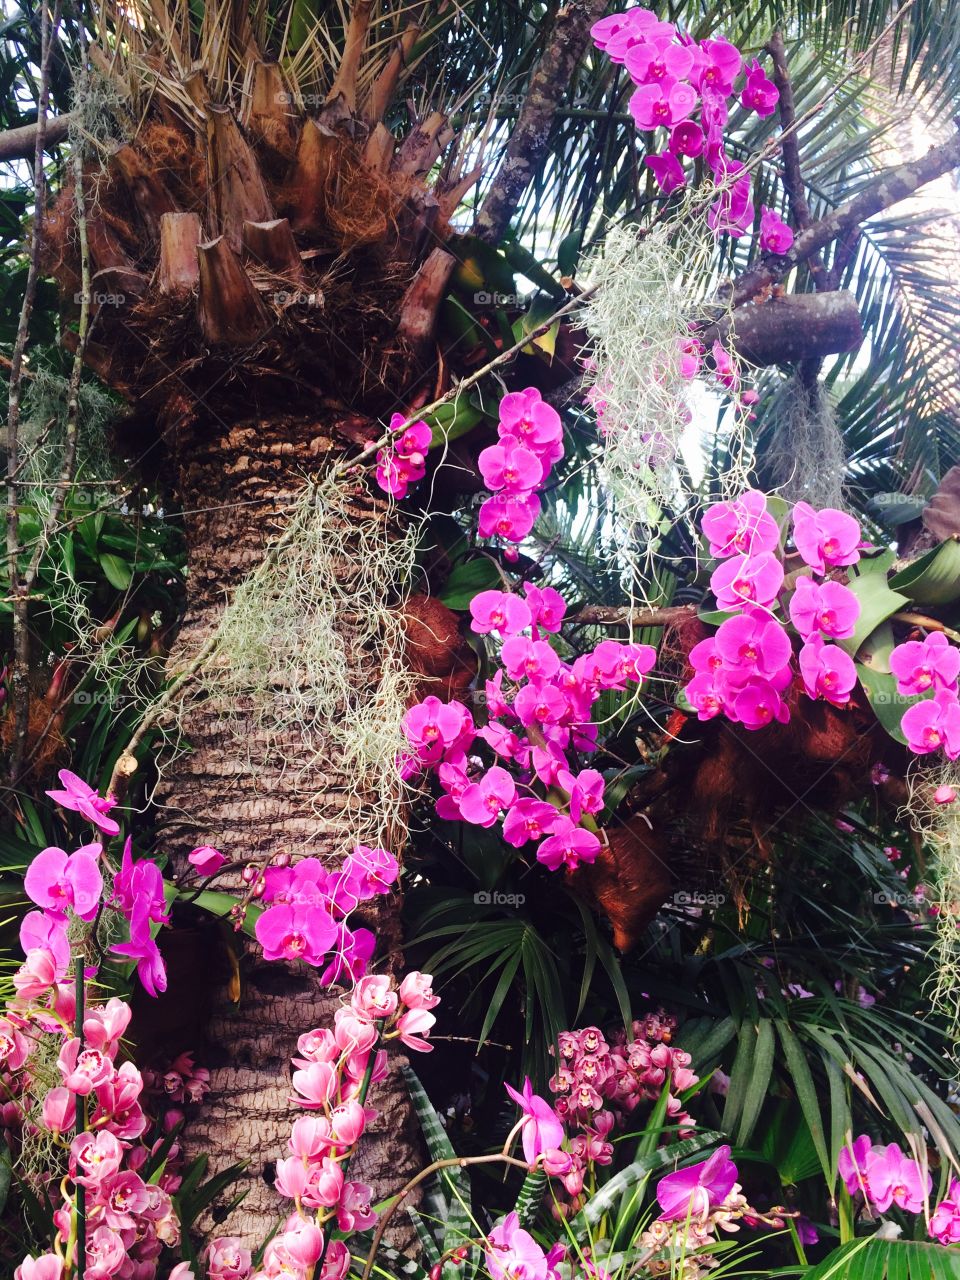 Orchid garden